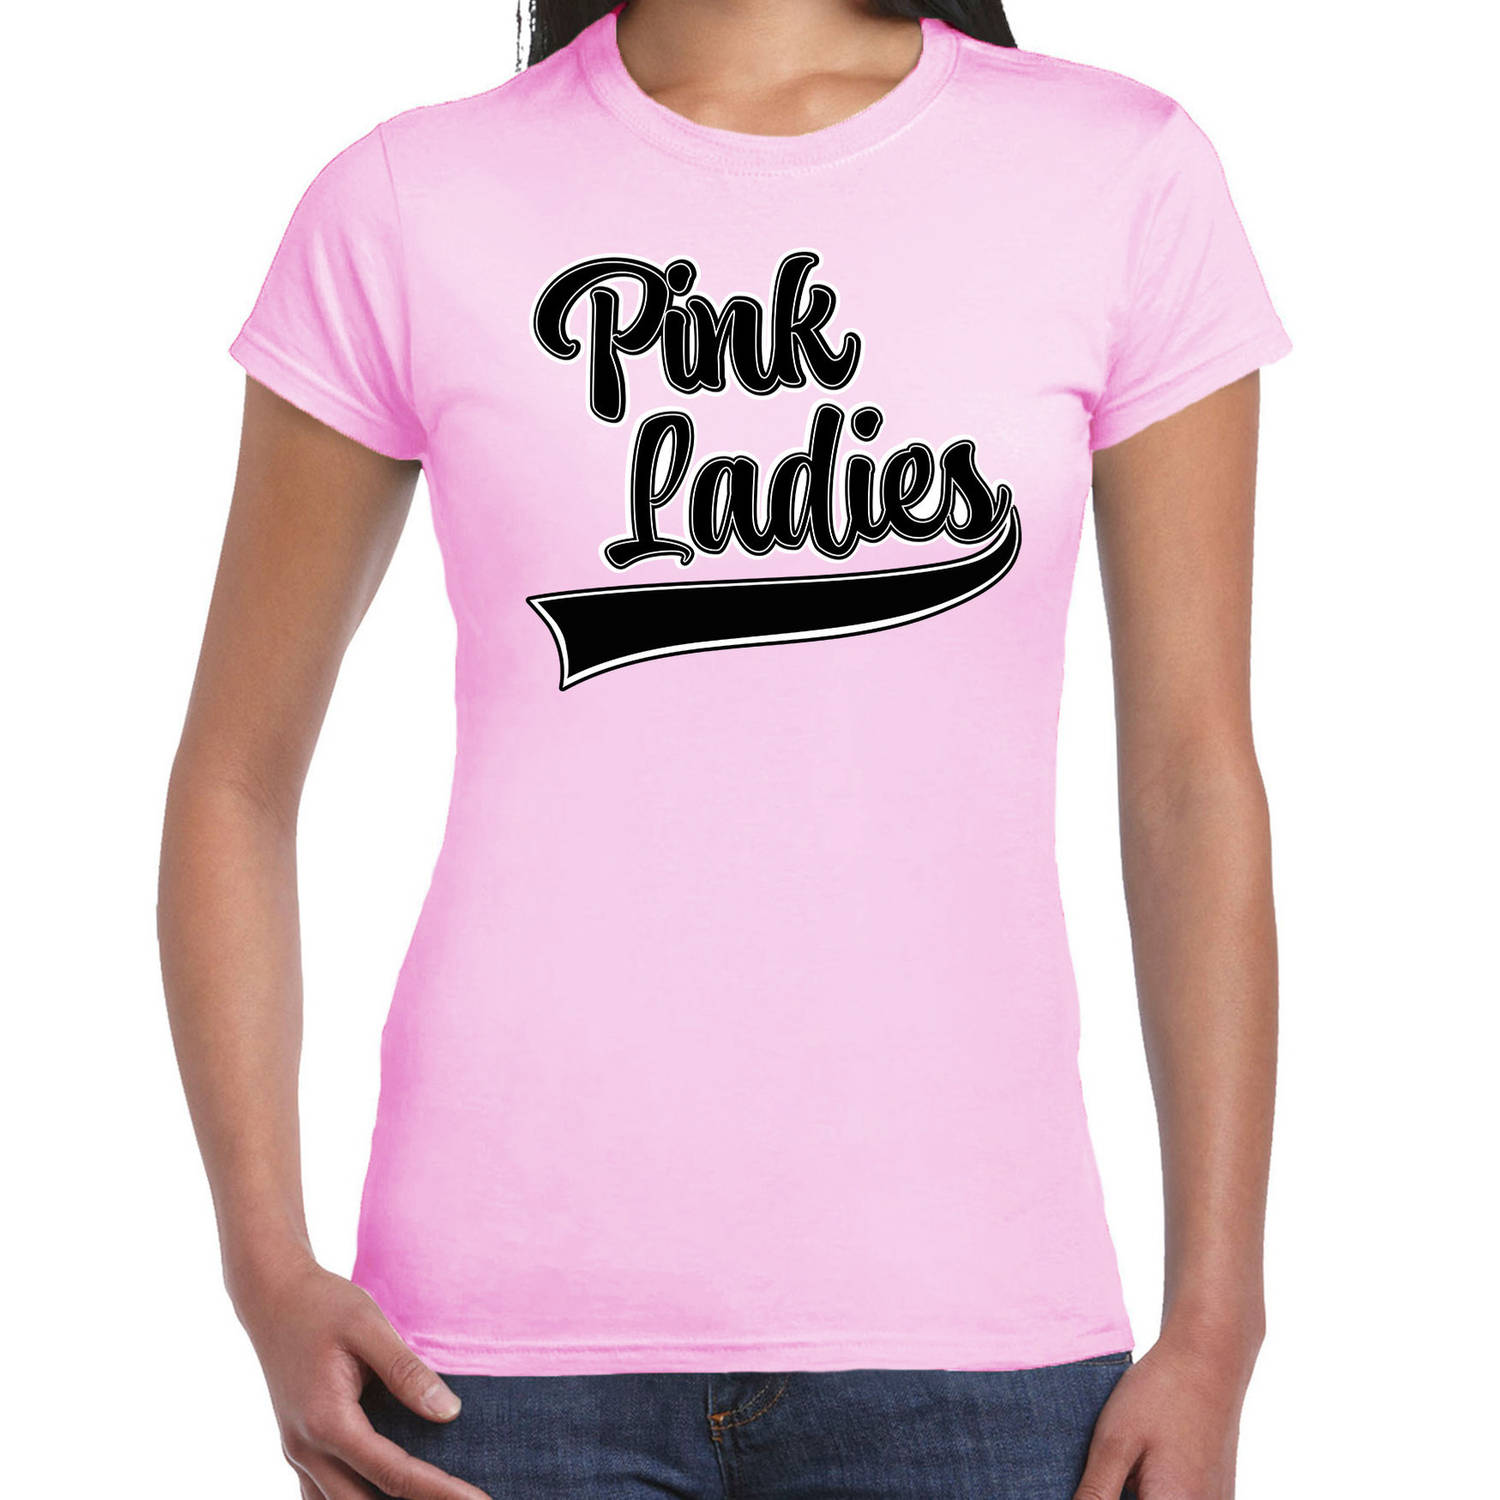 T-shirt Grease Pink ladies - lichtroze - carnaval shirt 2XL - Feestshirts